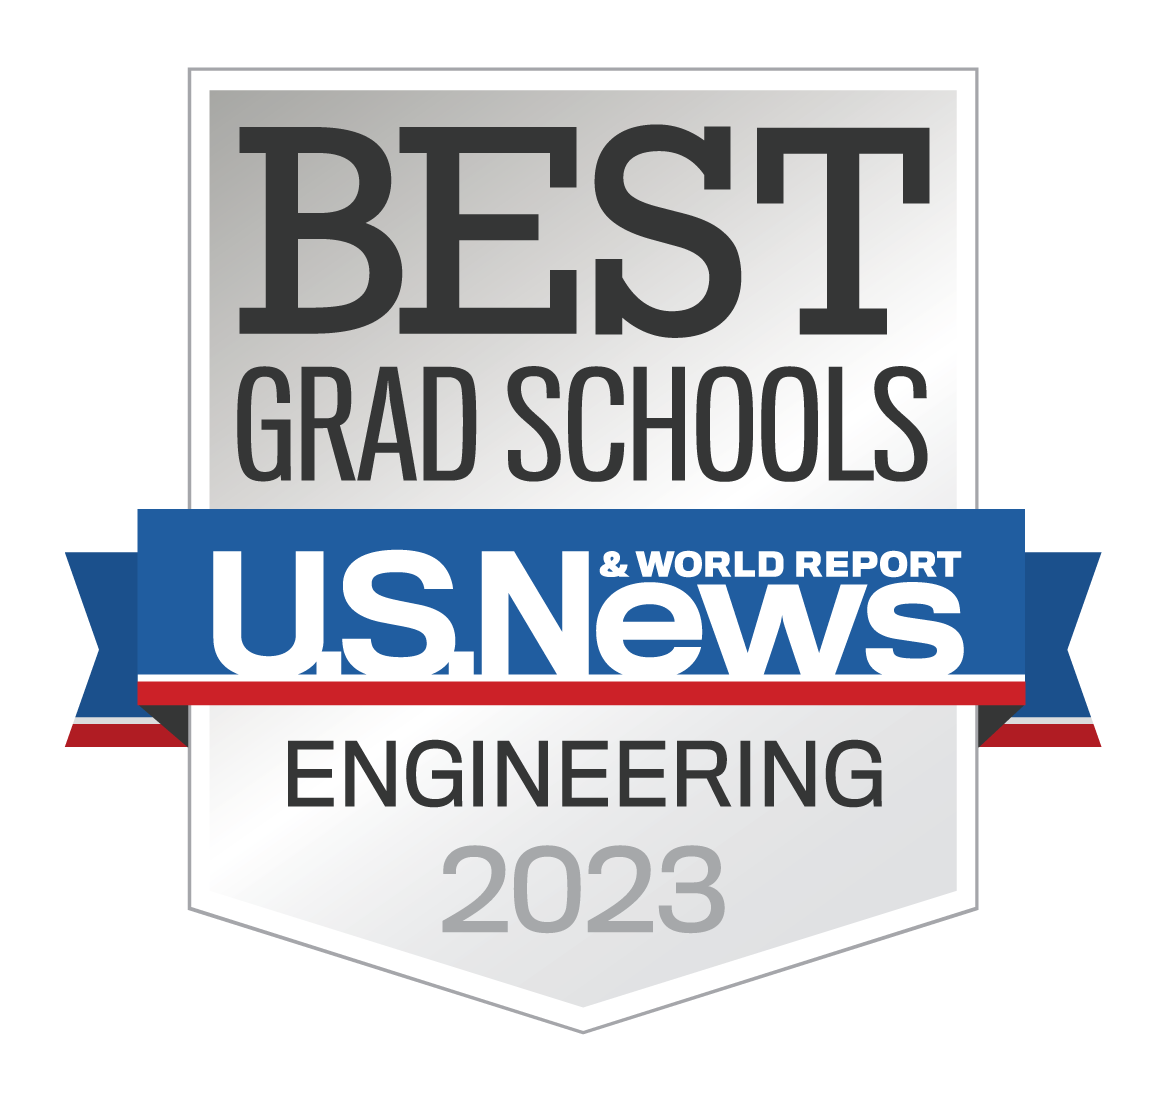 Best Engineering University 2023